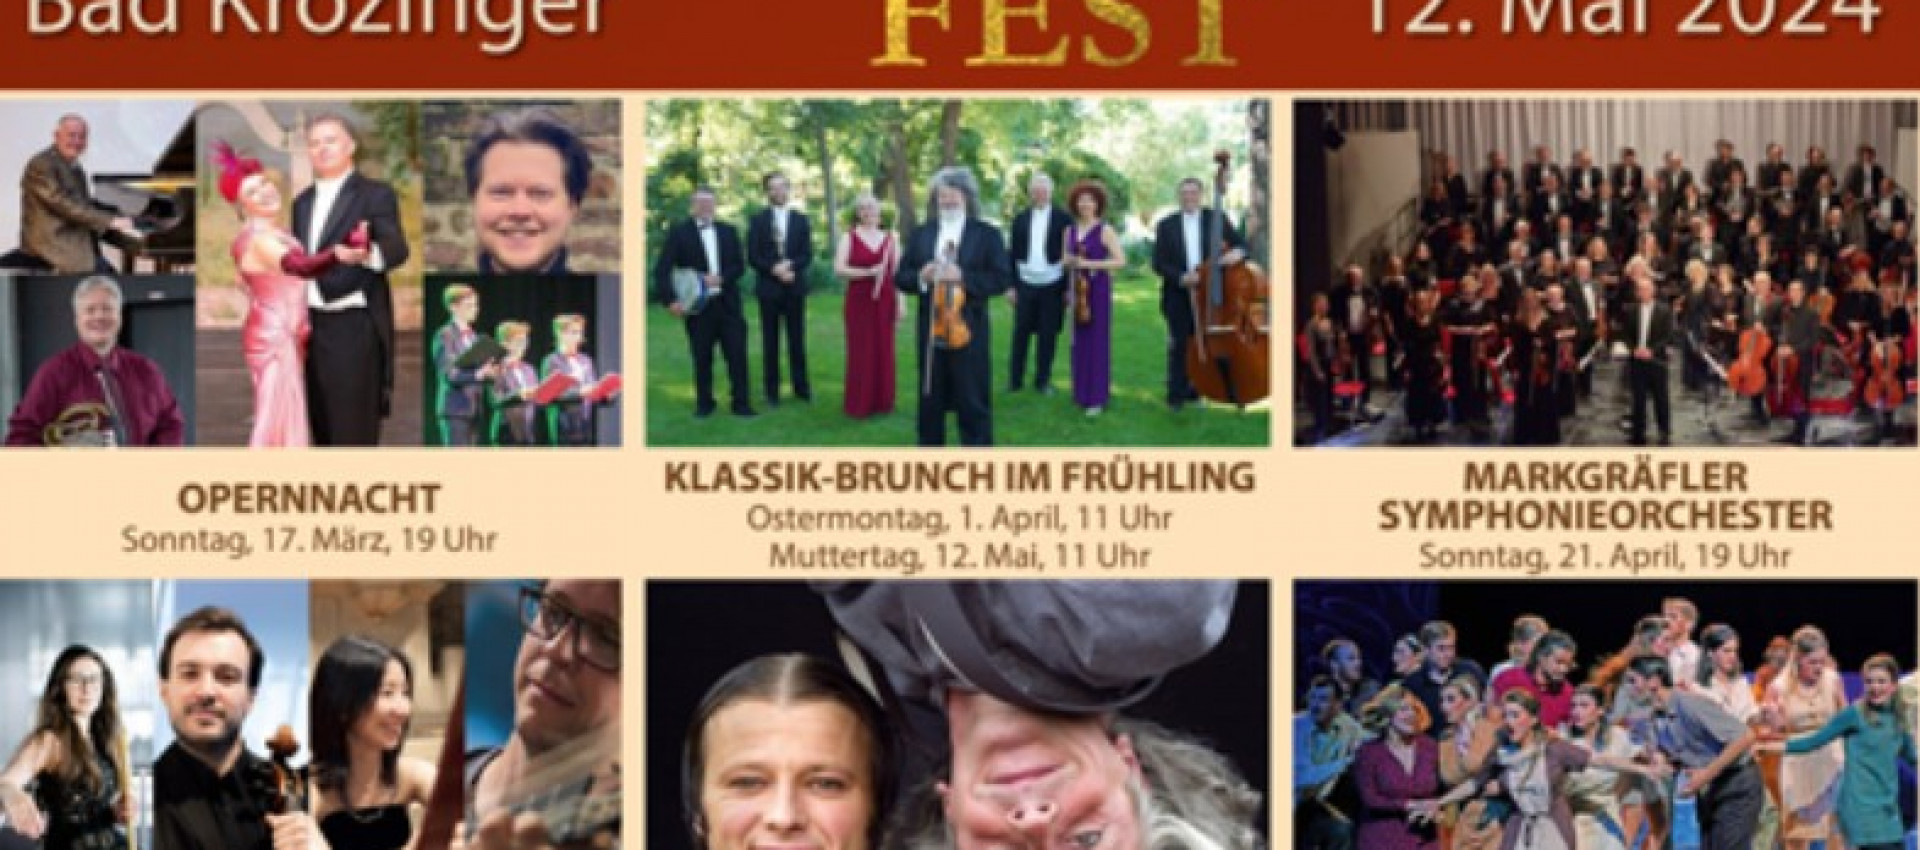 27. Bad Krozinger Mozart Fest vom 17.März - 12.Mai 2024